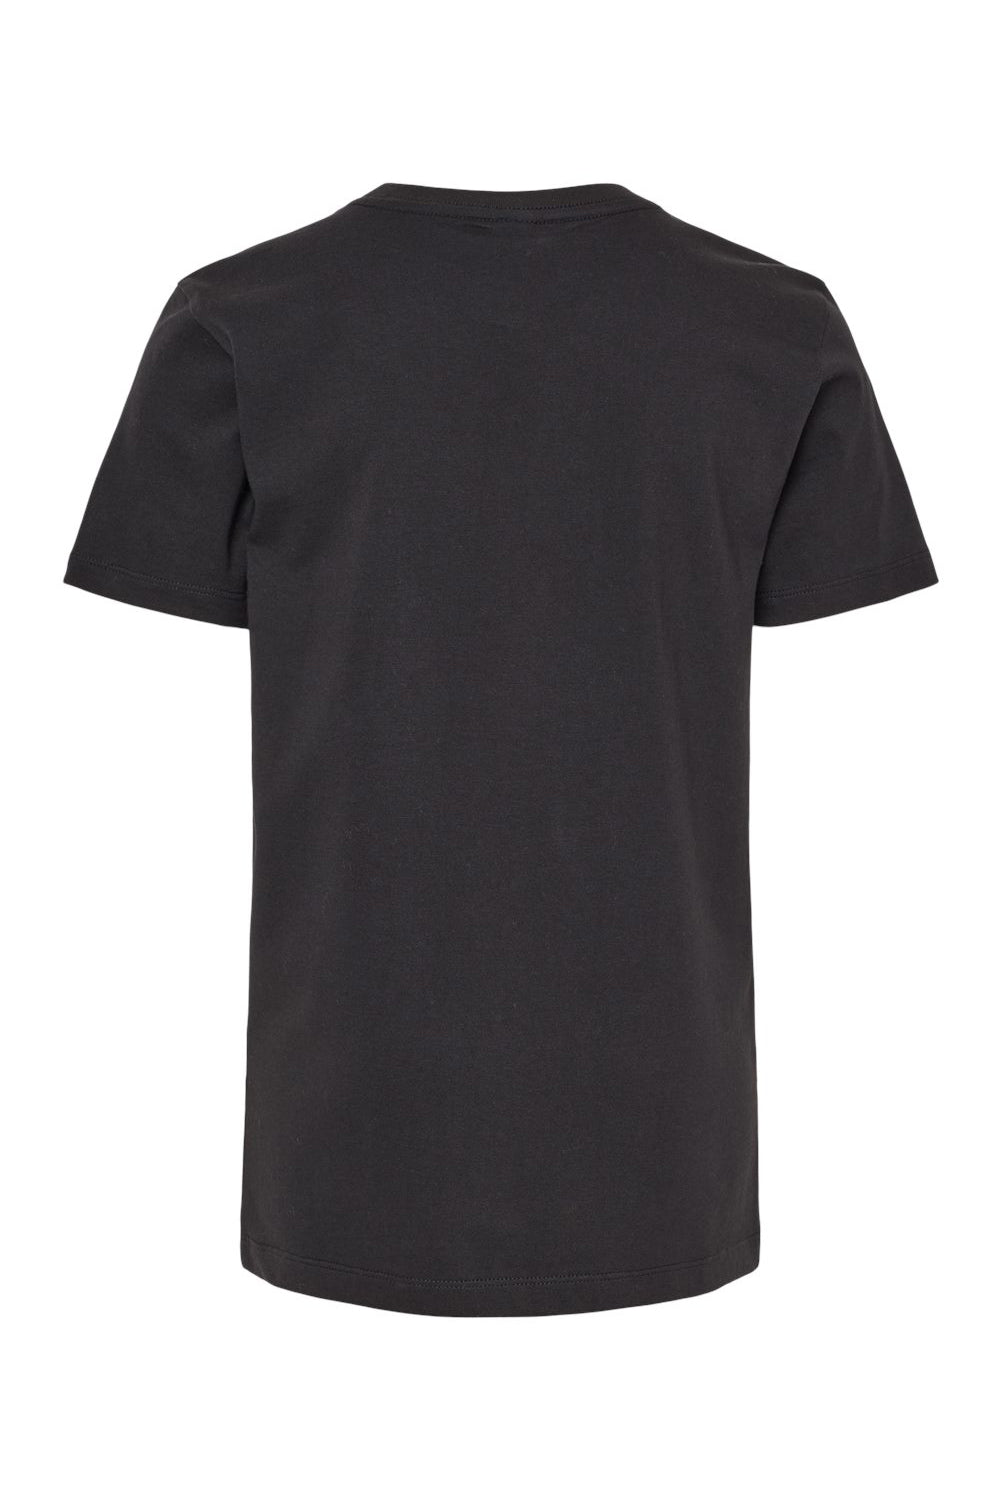 SoftShirts 402 Youth Organic Short Sleeve Crewneck T-Shirt Black Flat Back